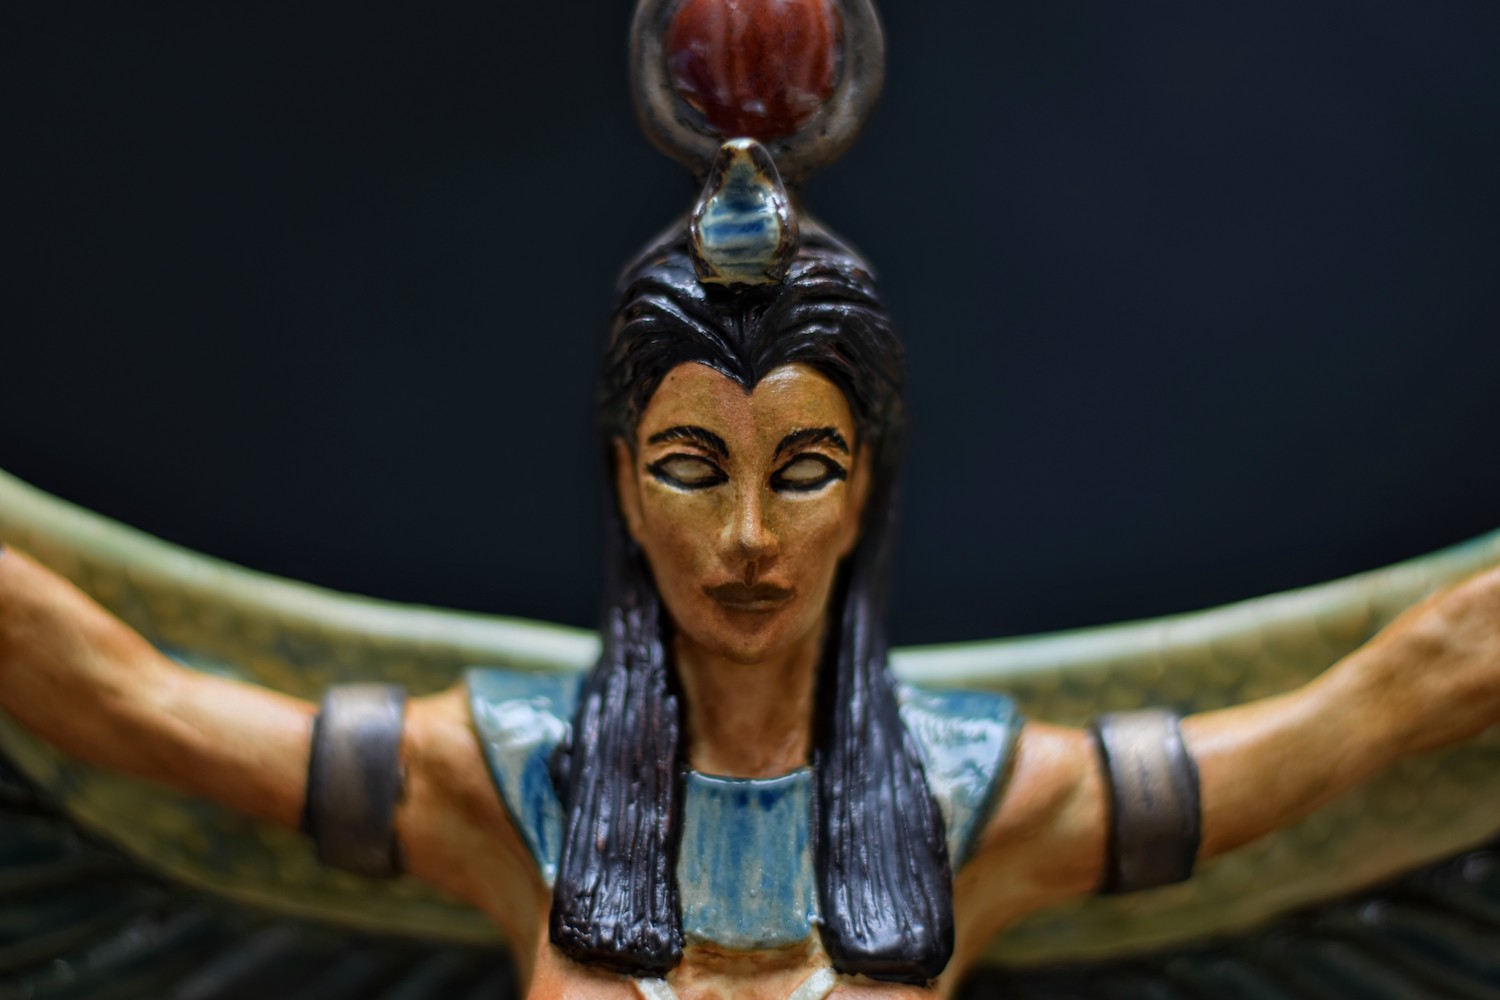 Isis Egyptian Goddess